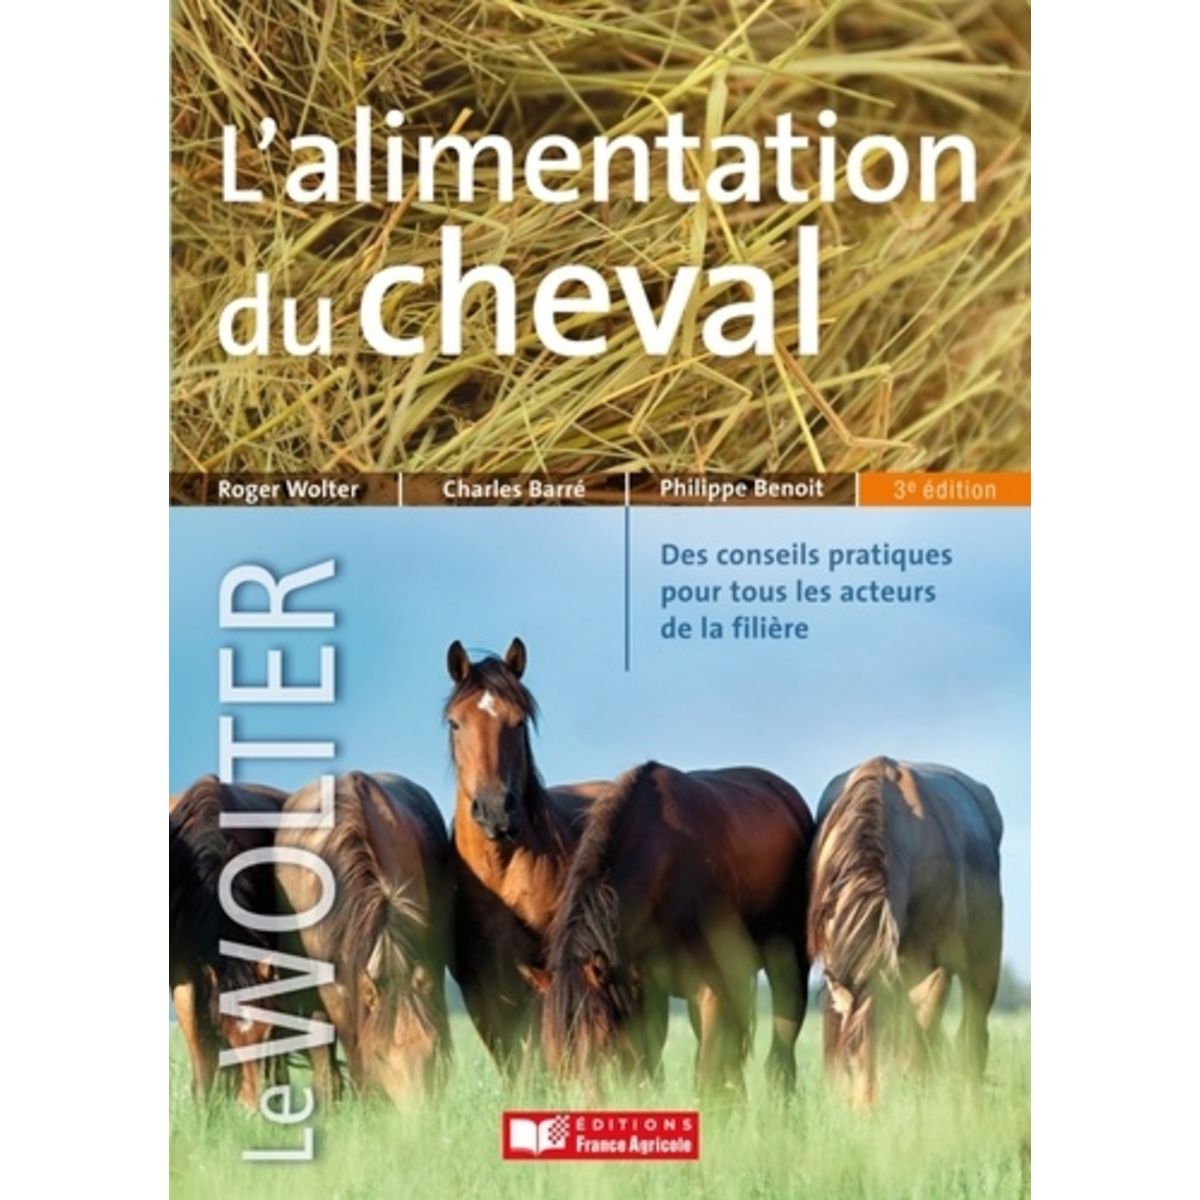  L'ALIMENTATION DU CHEVAL. 3E EDITION, Wolter Roger